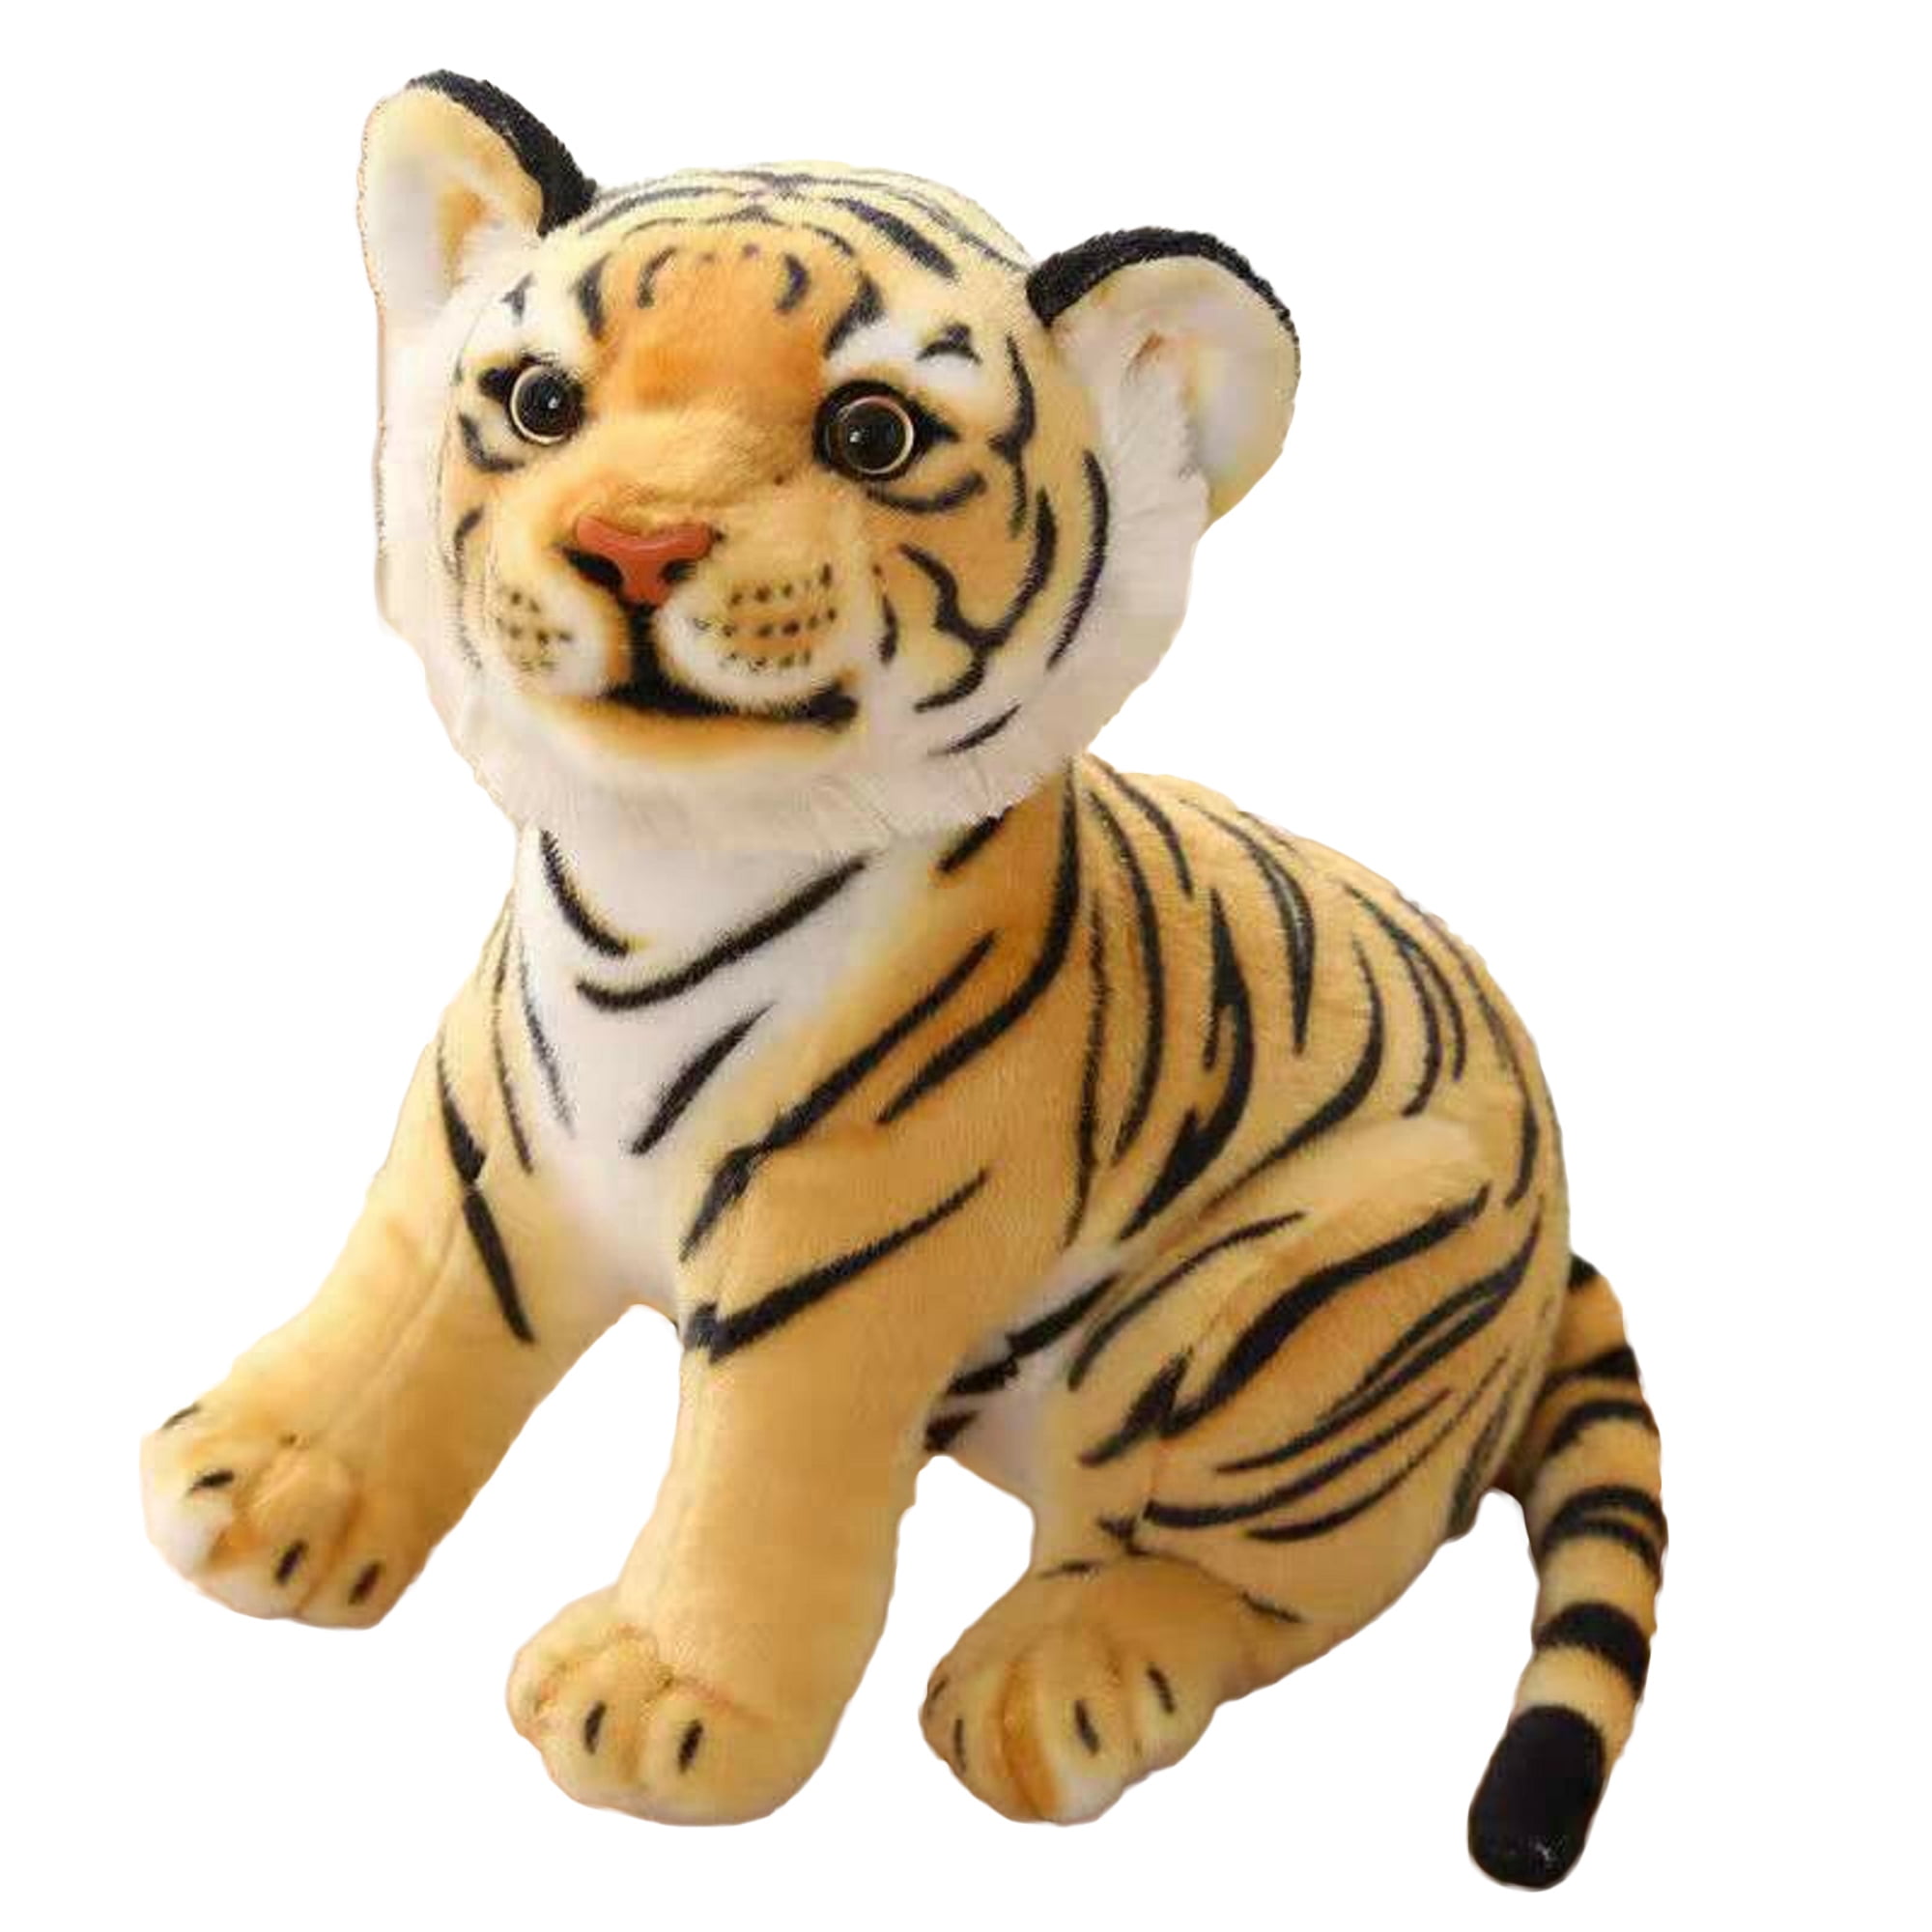 Bengal Tiger Plush Doll Super Soft Cute Stuffed Animal Toy Orange Black Big Size 